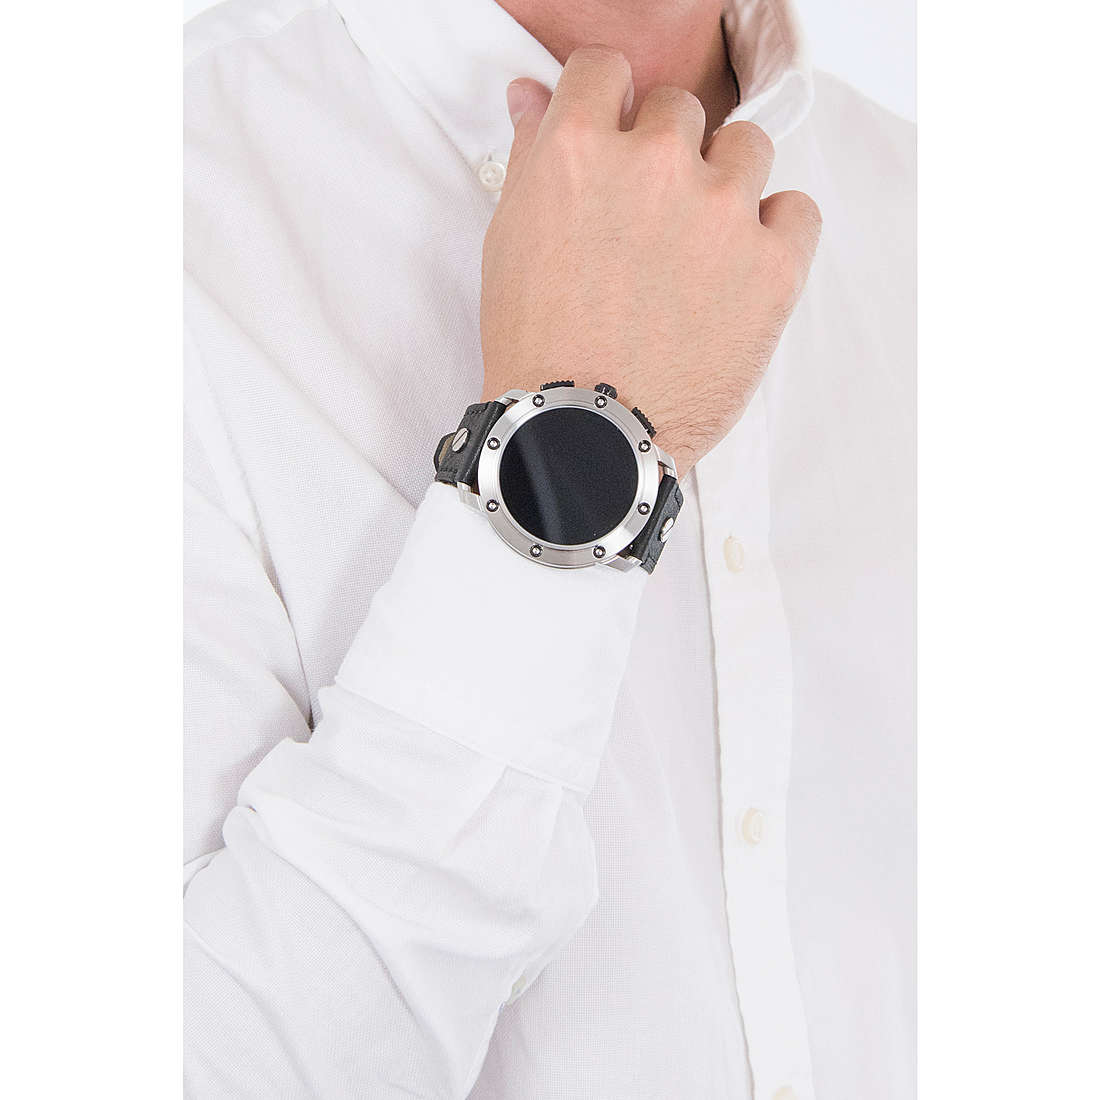 Diesel Smartwatches Axial man DZT2014 wearing